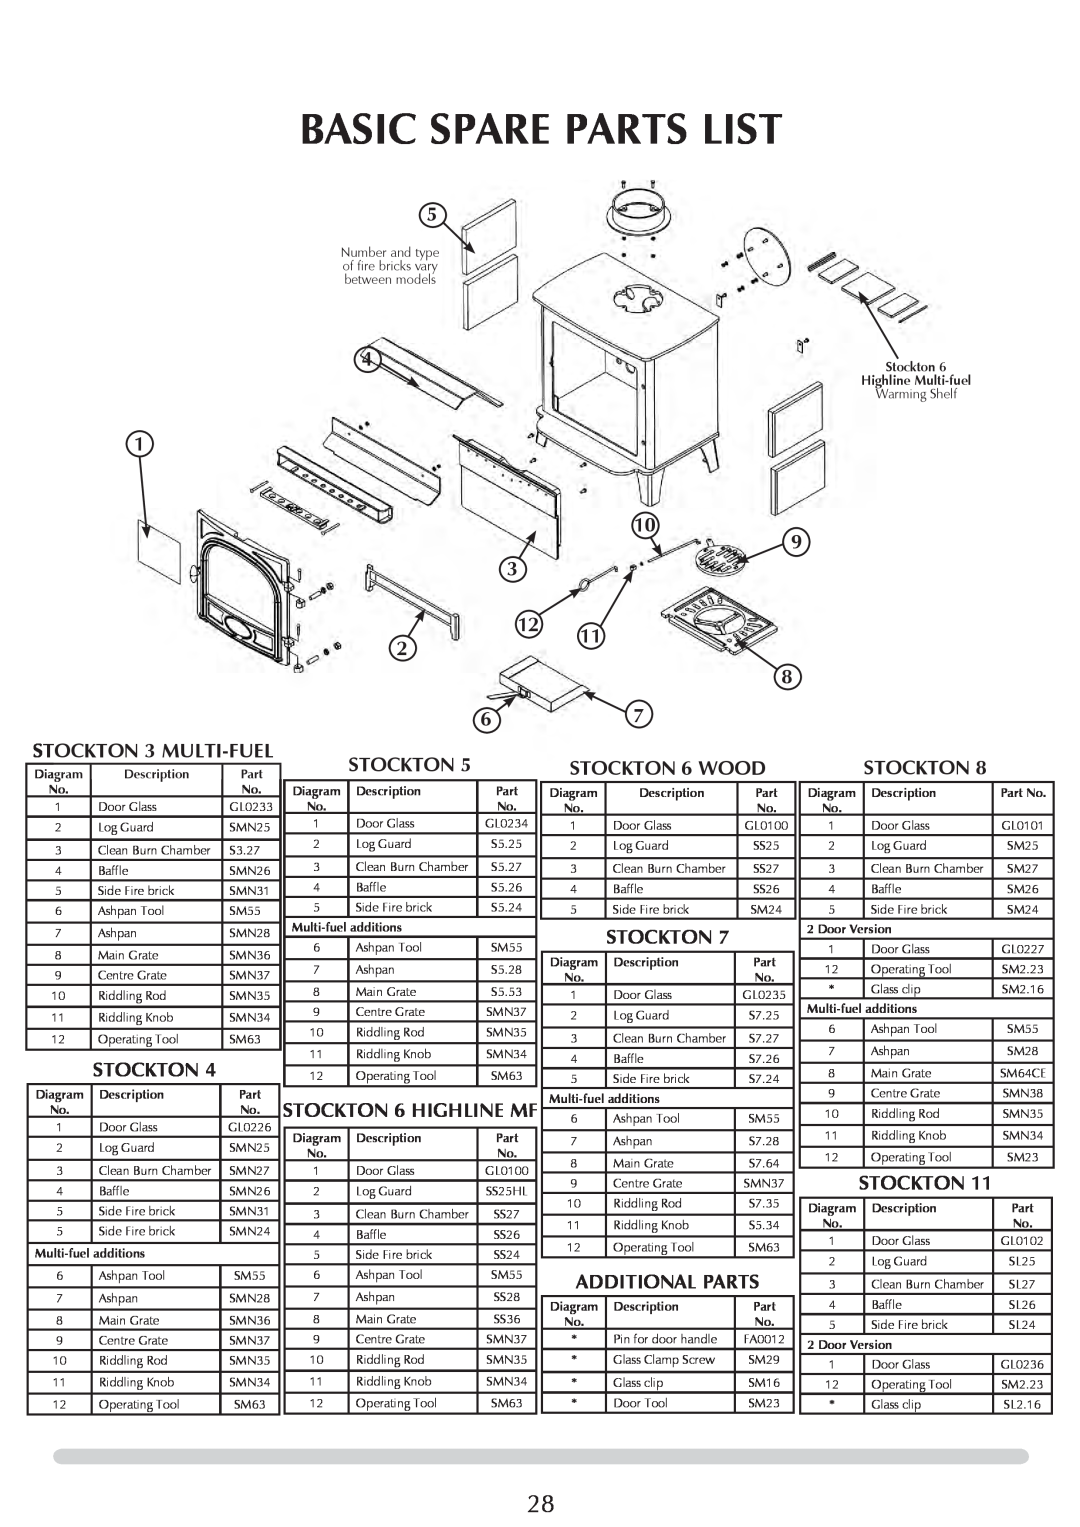 Stovax 7114, 7106HC, 7105, 7106lC, 7113lC, 7162, 7130, 7163, 7160, 7128, 7127, 7161, 7119, 7116lC, 7116HC Basic Spare Parts List 